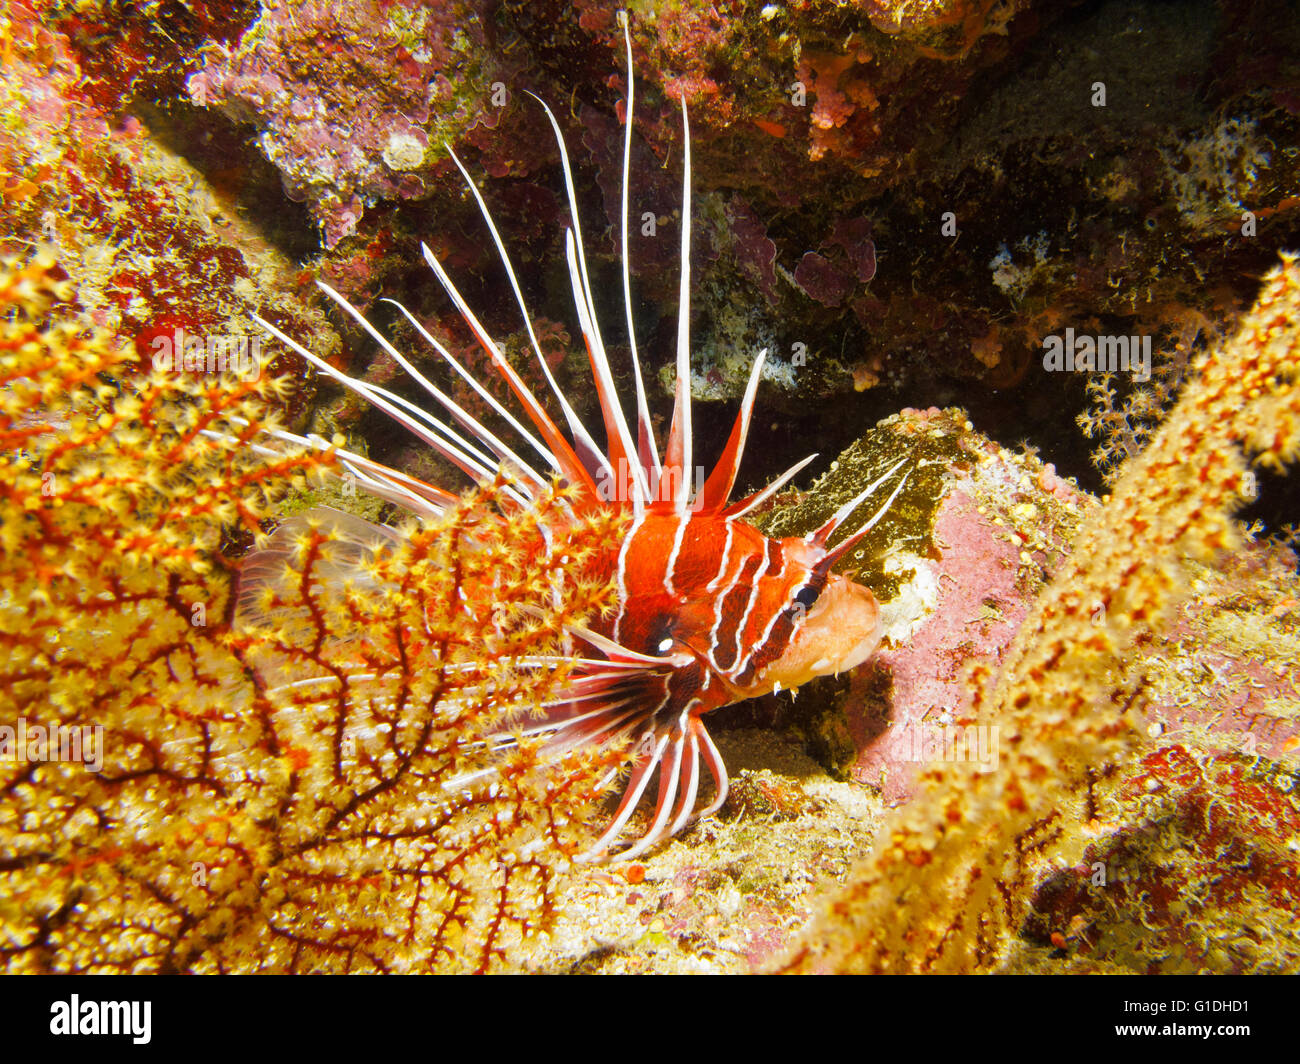 A Clearfin Lionfish, beautiful but dangerous. Stock Photo